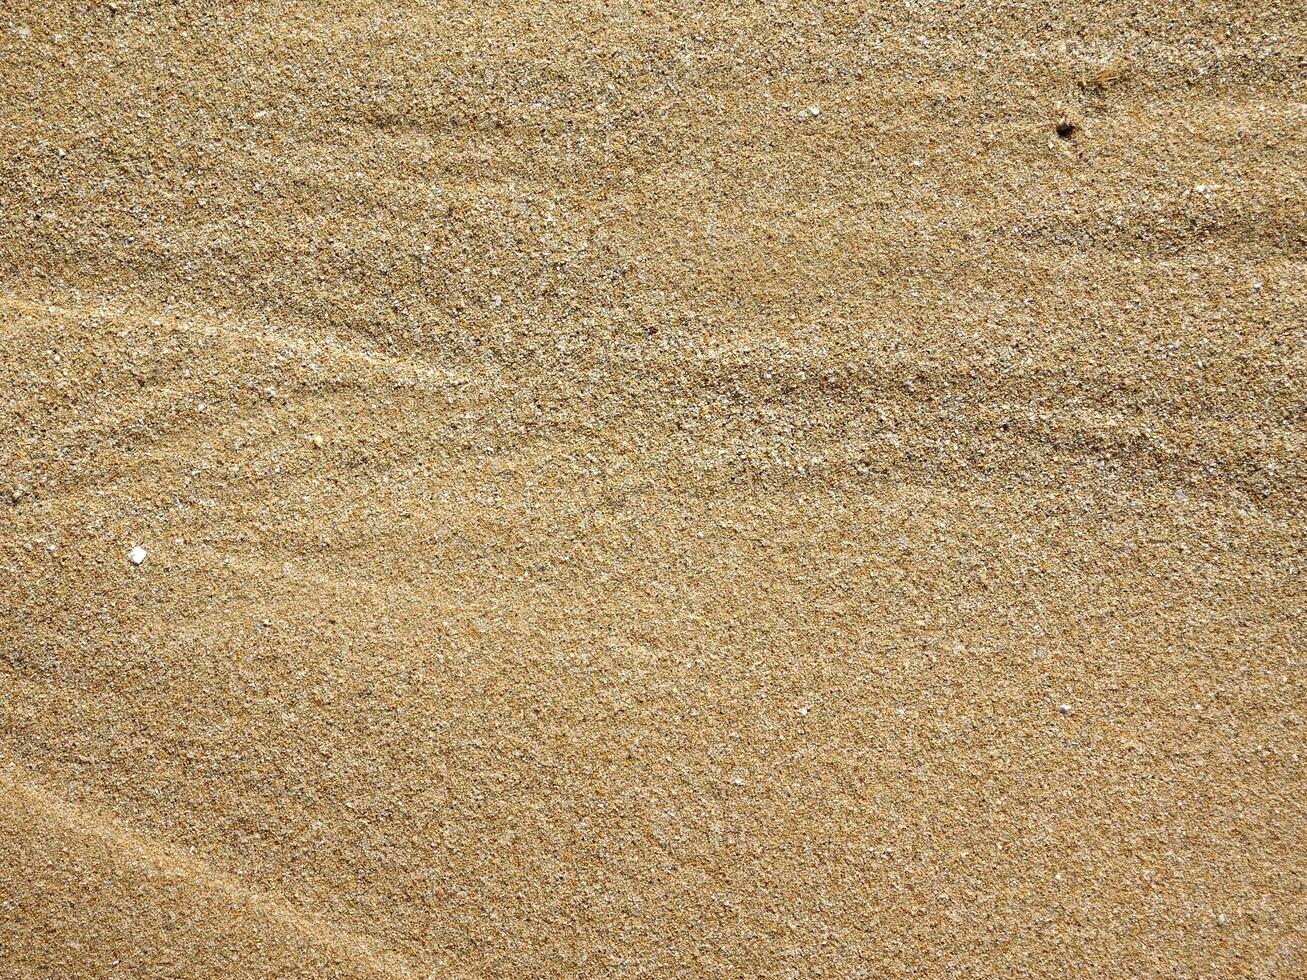 Sand texture outdoor photo